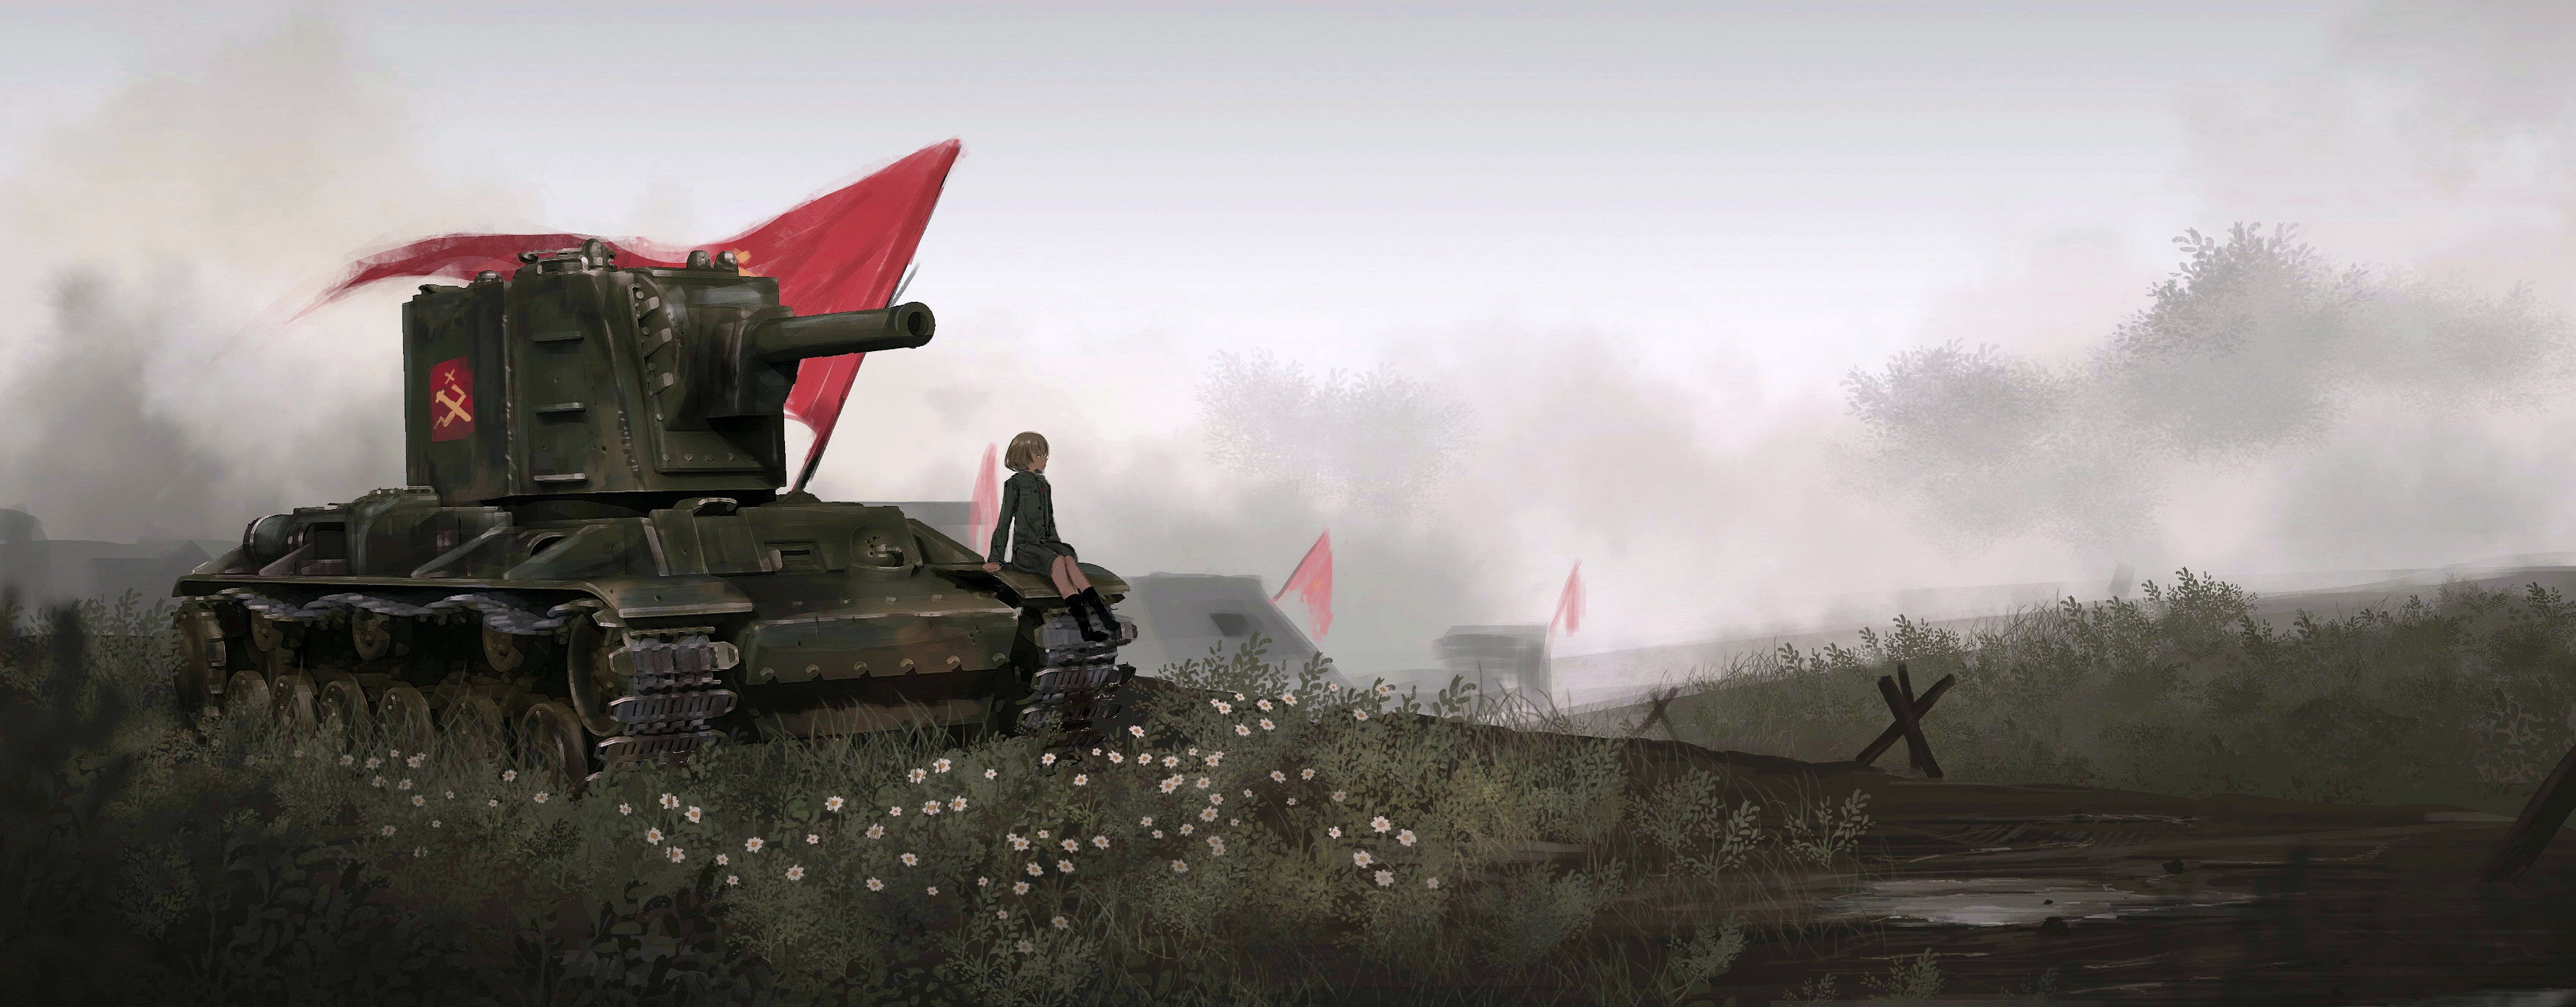 anime girls, tank, M103, rain, umbrella, military vehicle, vehicle, anime |  1665x900 Wallpaper - wallhaven.cc